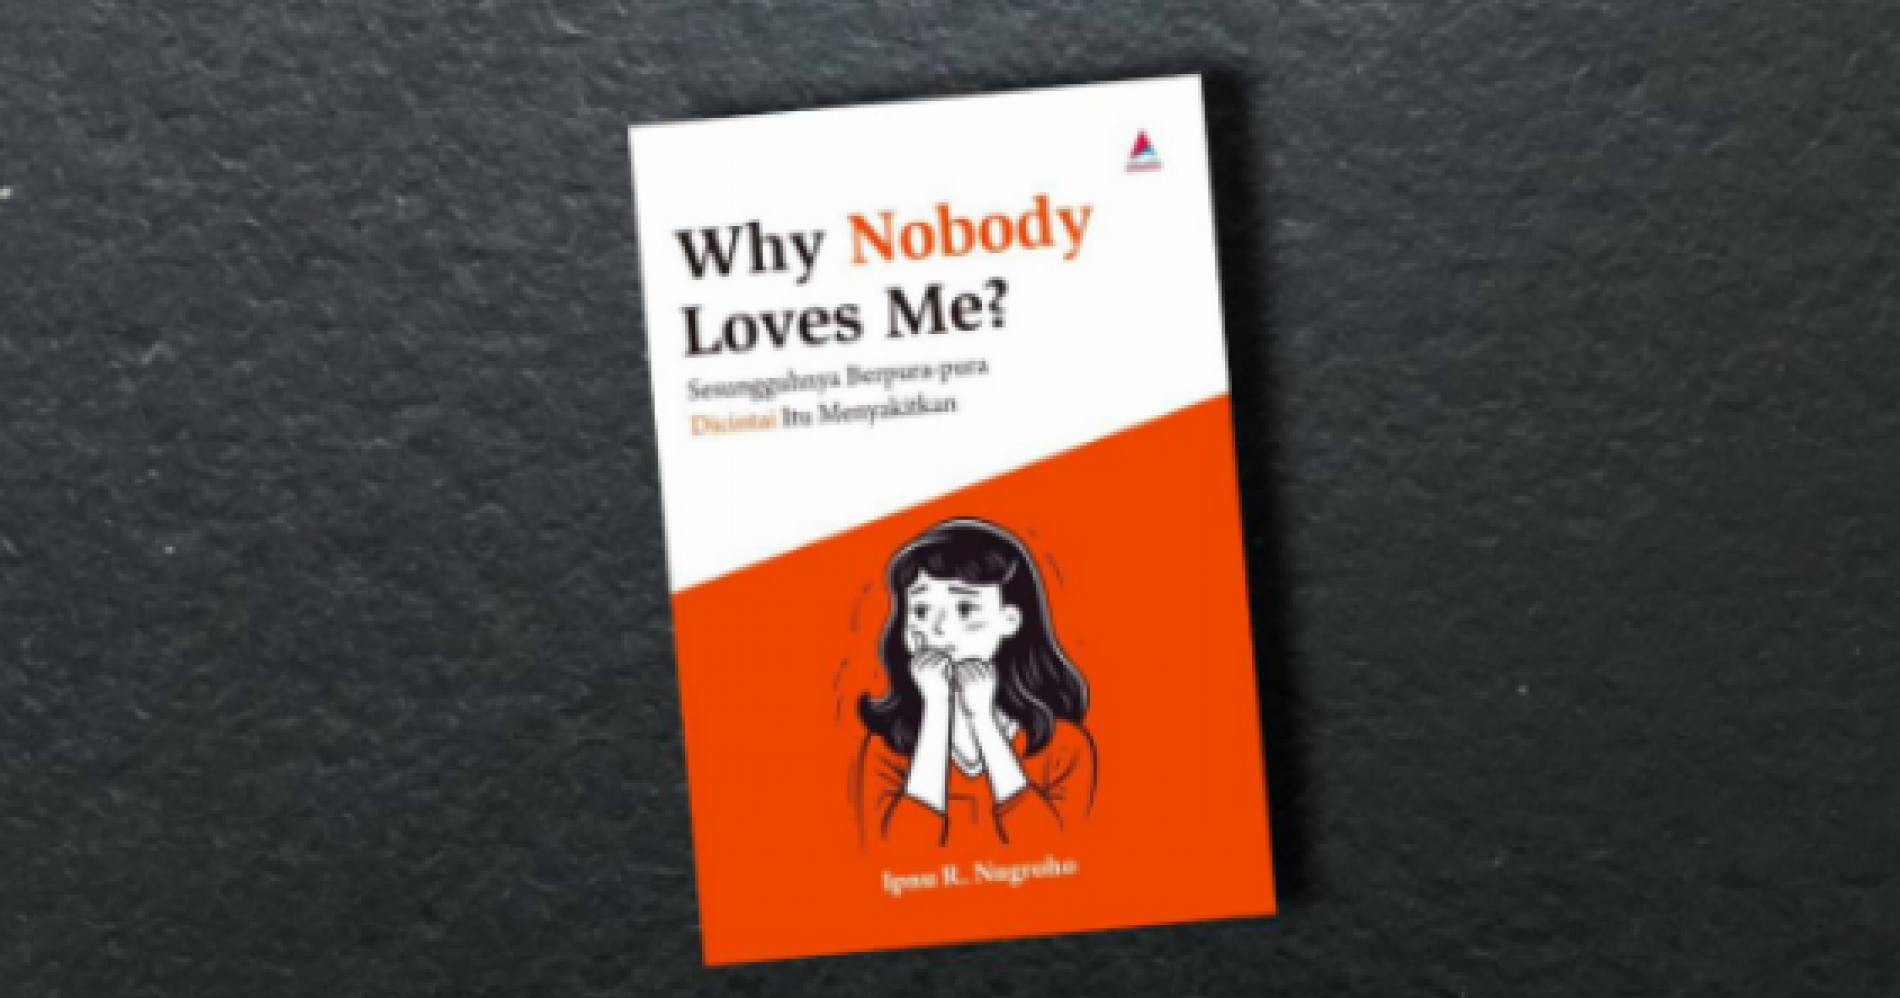 Buku Why Nobody Loves Me? karya Ipnu R. Nugroho (Sumber gambar: Muhamad Ali)